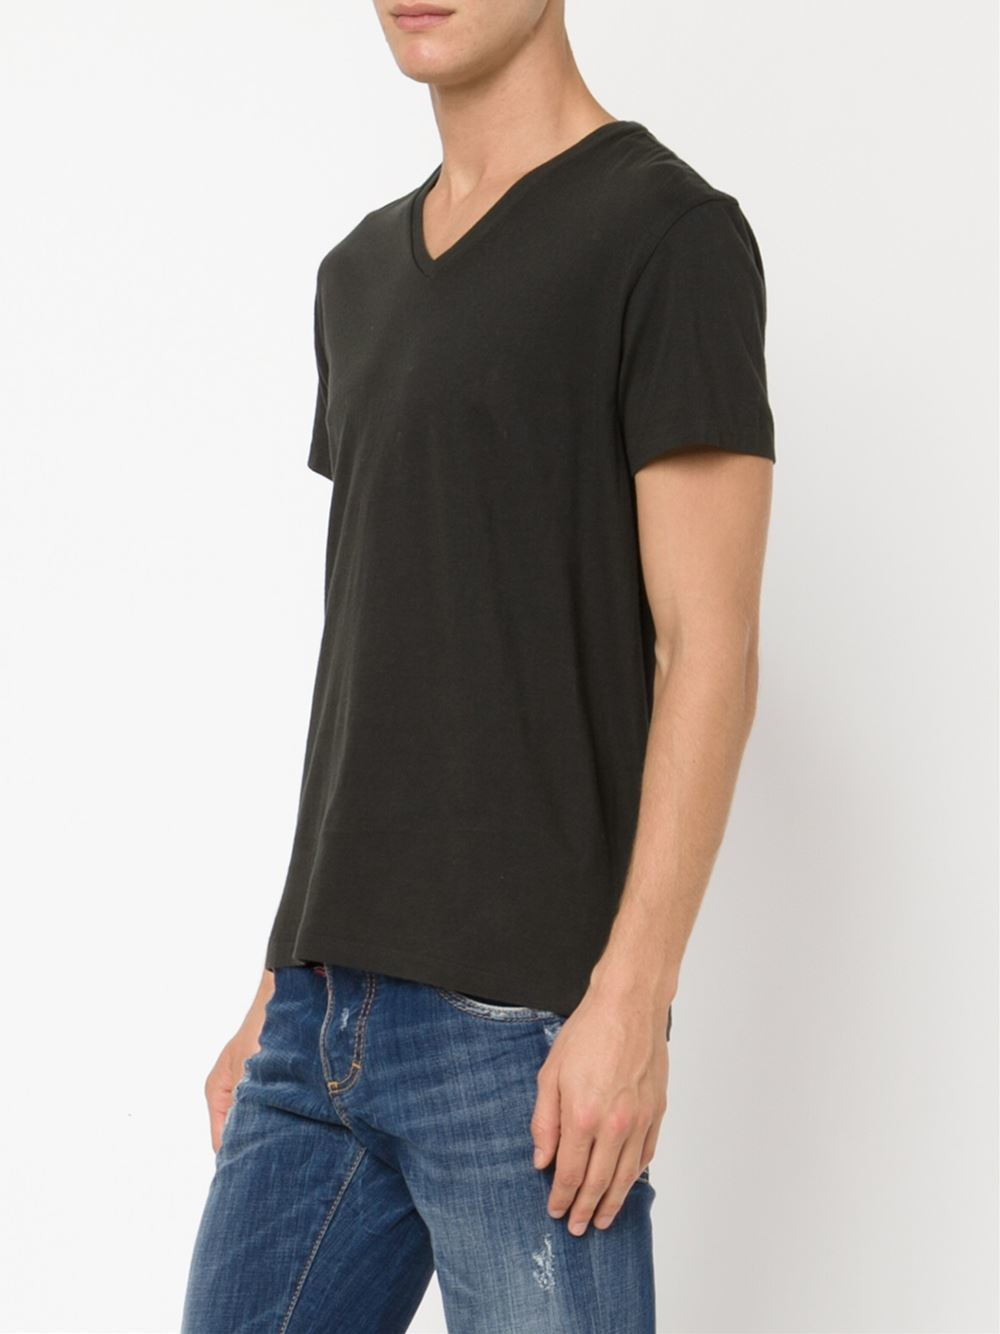 Rrl V-neck T-shirt in Black for Men - Lyst